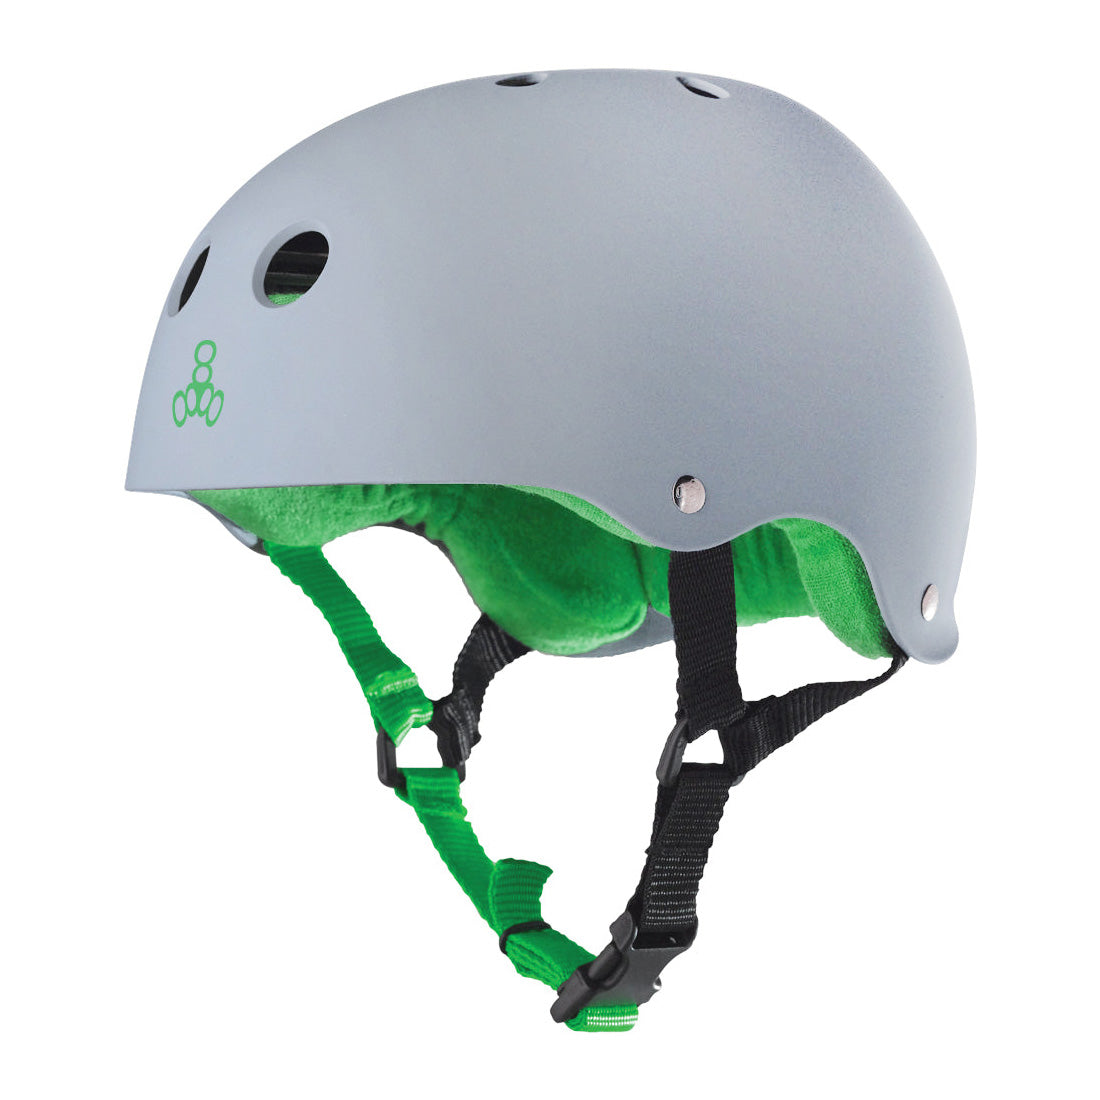 Triple 8 Skate SS Helmet - Carbon Grey Rubber Helmets